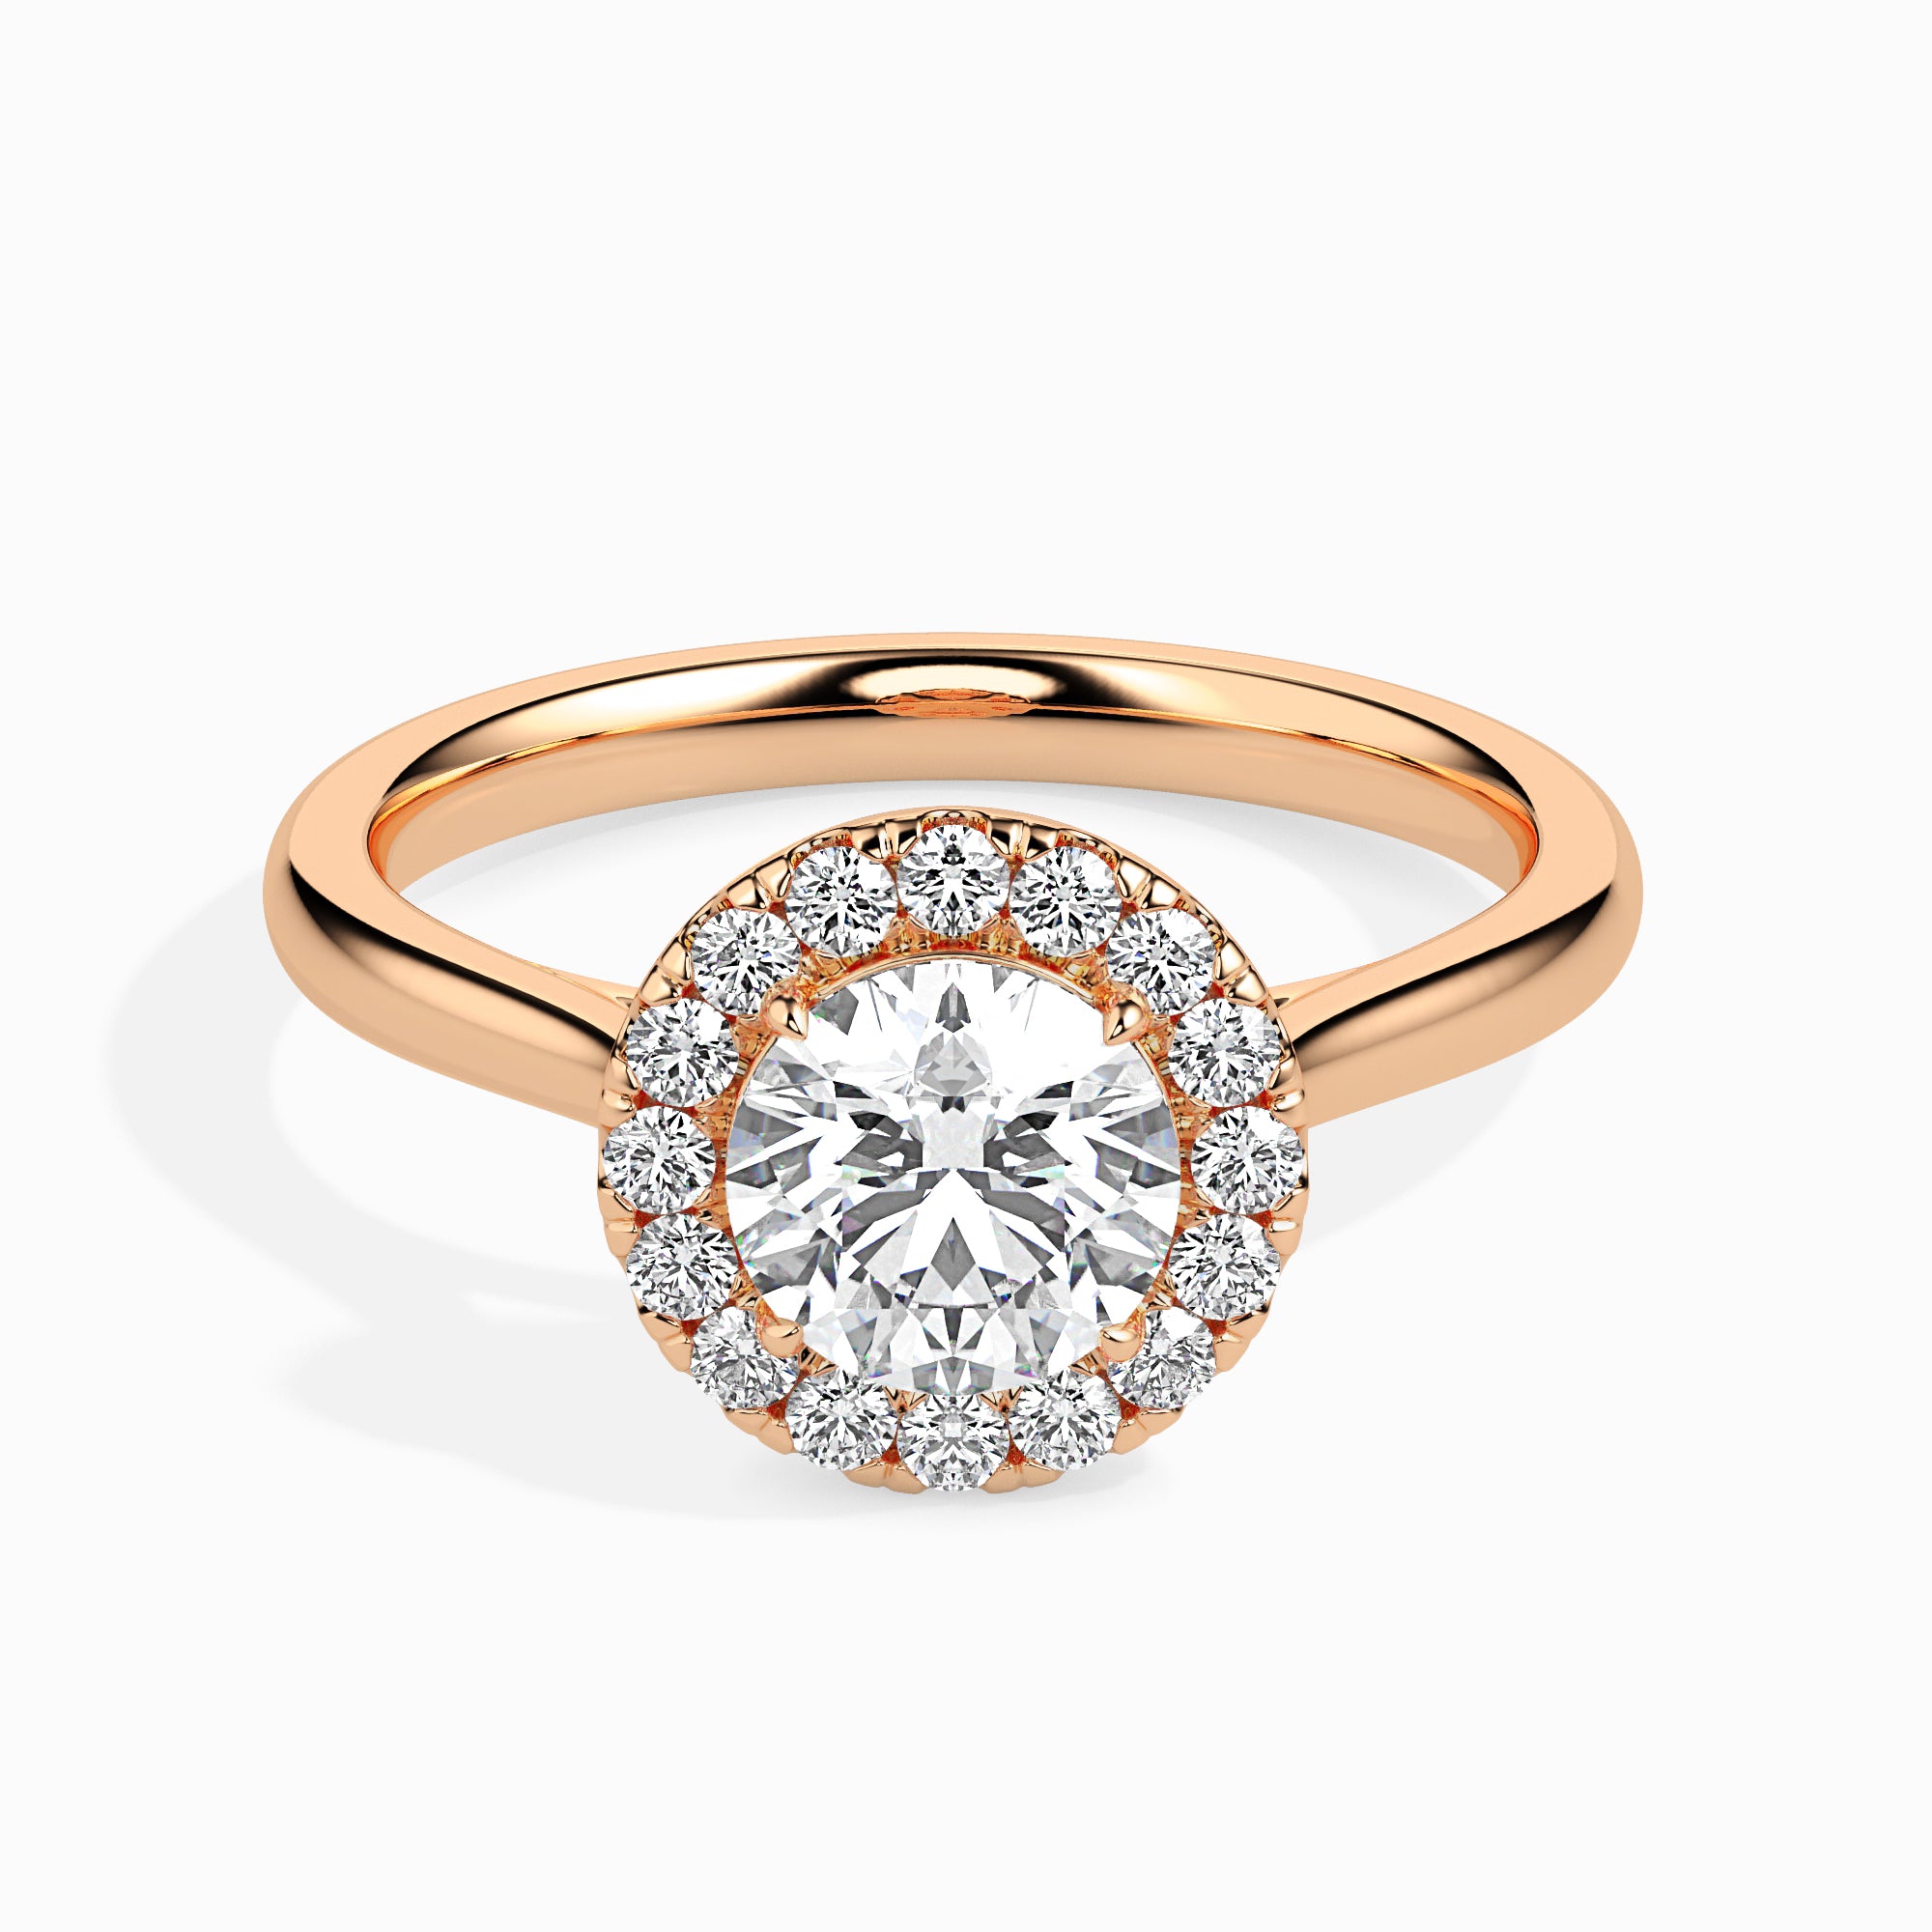 70-Pointer Solitaire Diamond Shank 18K Rose Gold Ring JL AU LG G 19021R-A